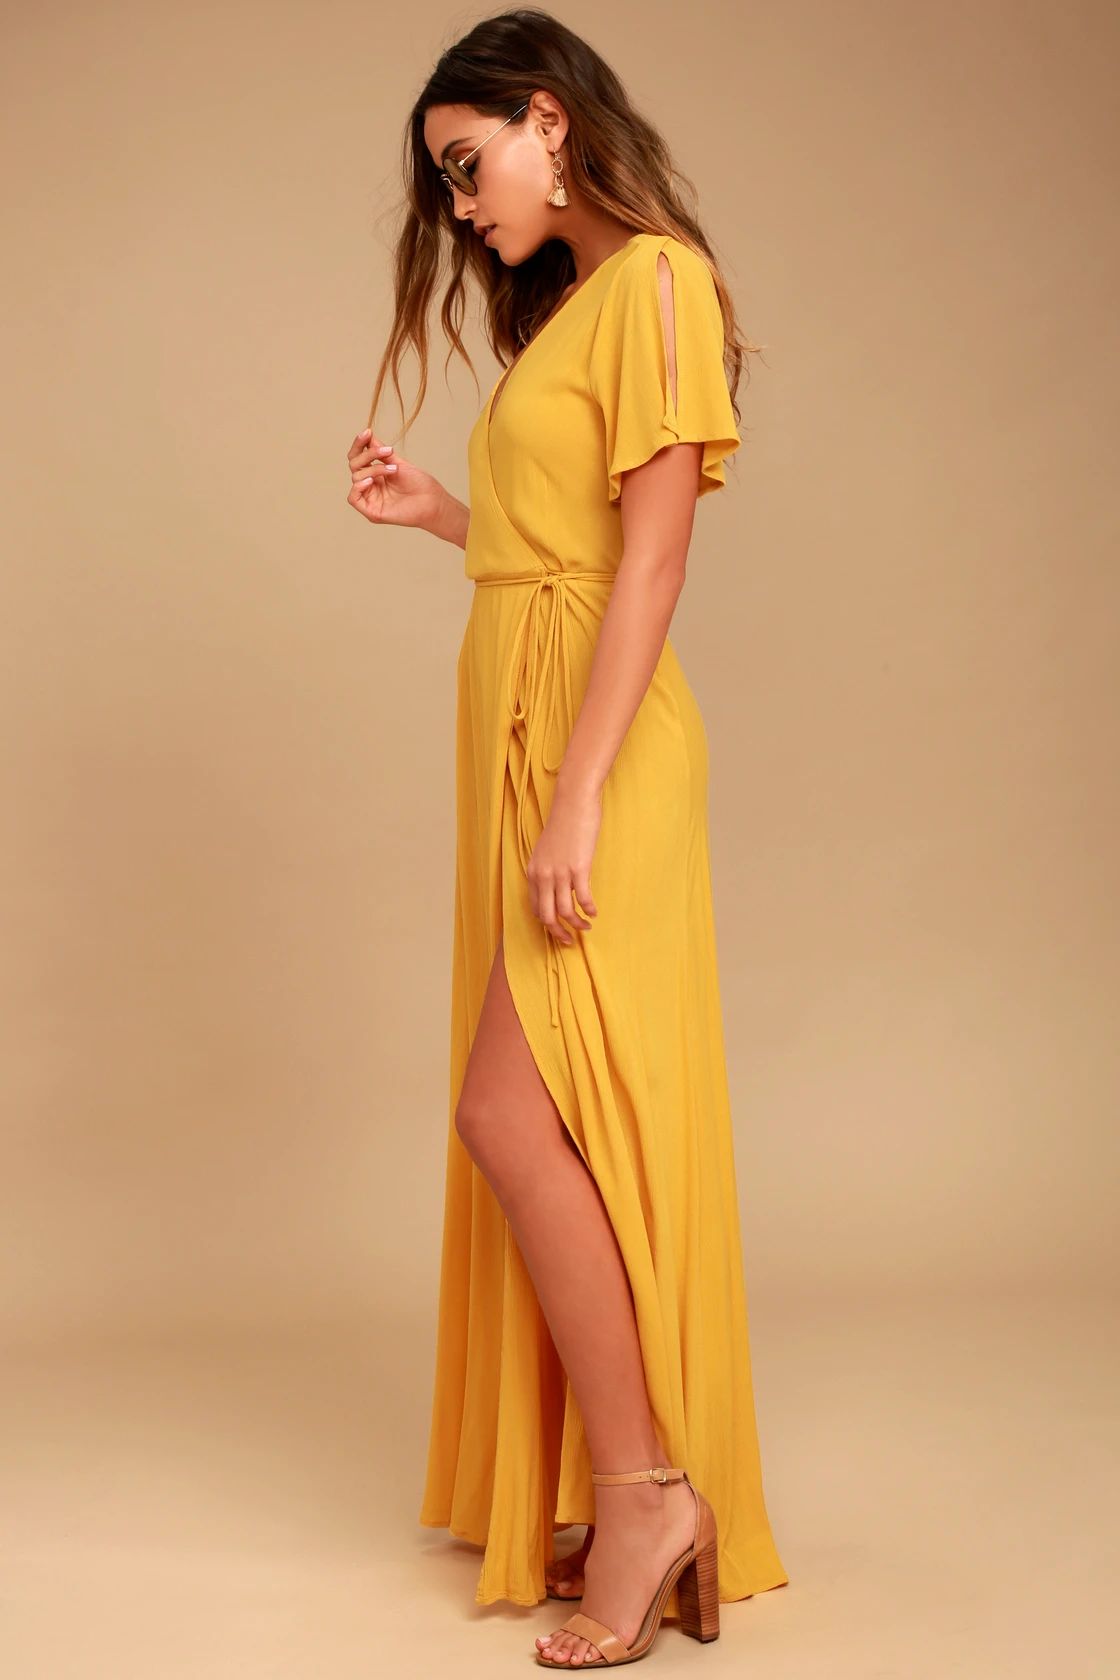 Much Obliged Golden Yellow Wrap Maxi Dress | Lulus